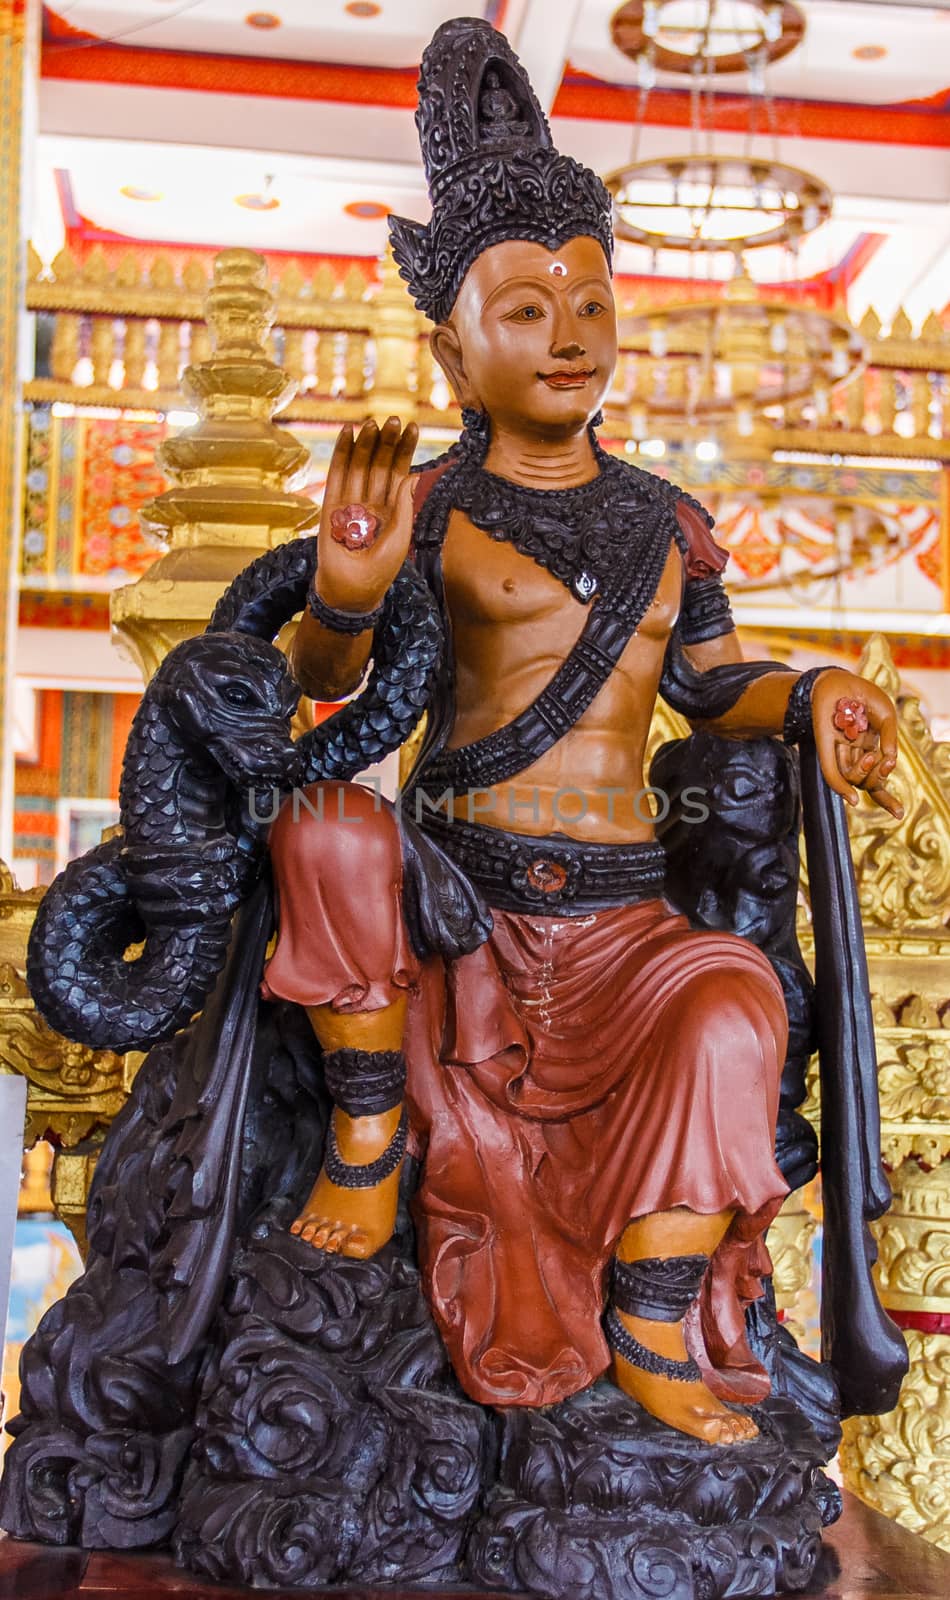 The statue in Phra Mahathat Kaen Nakhon